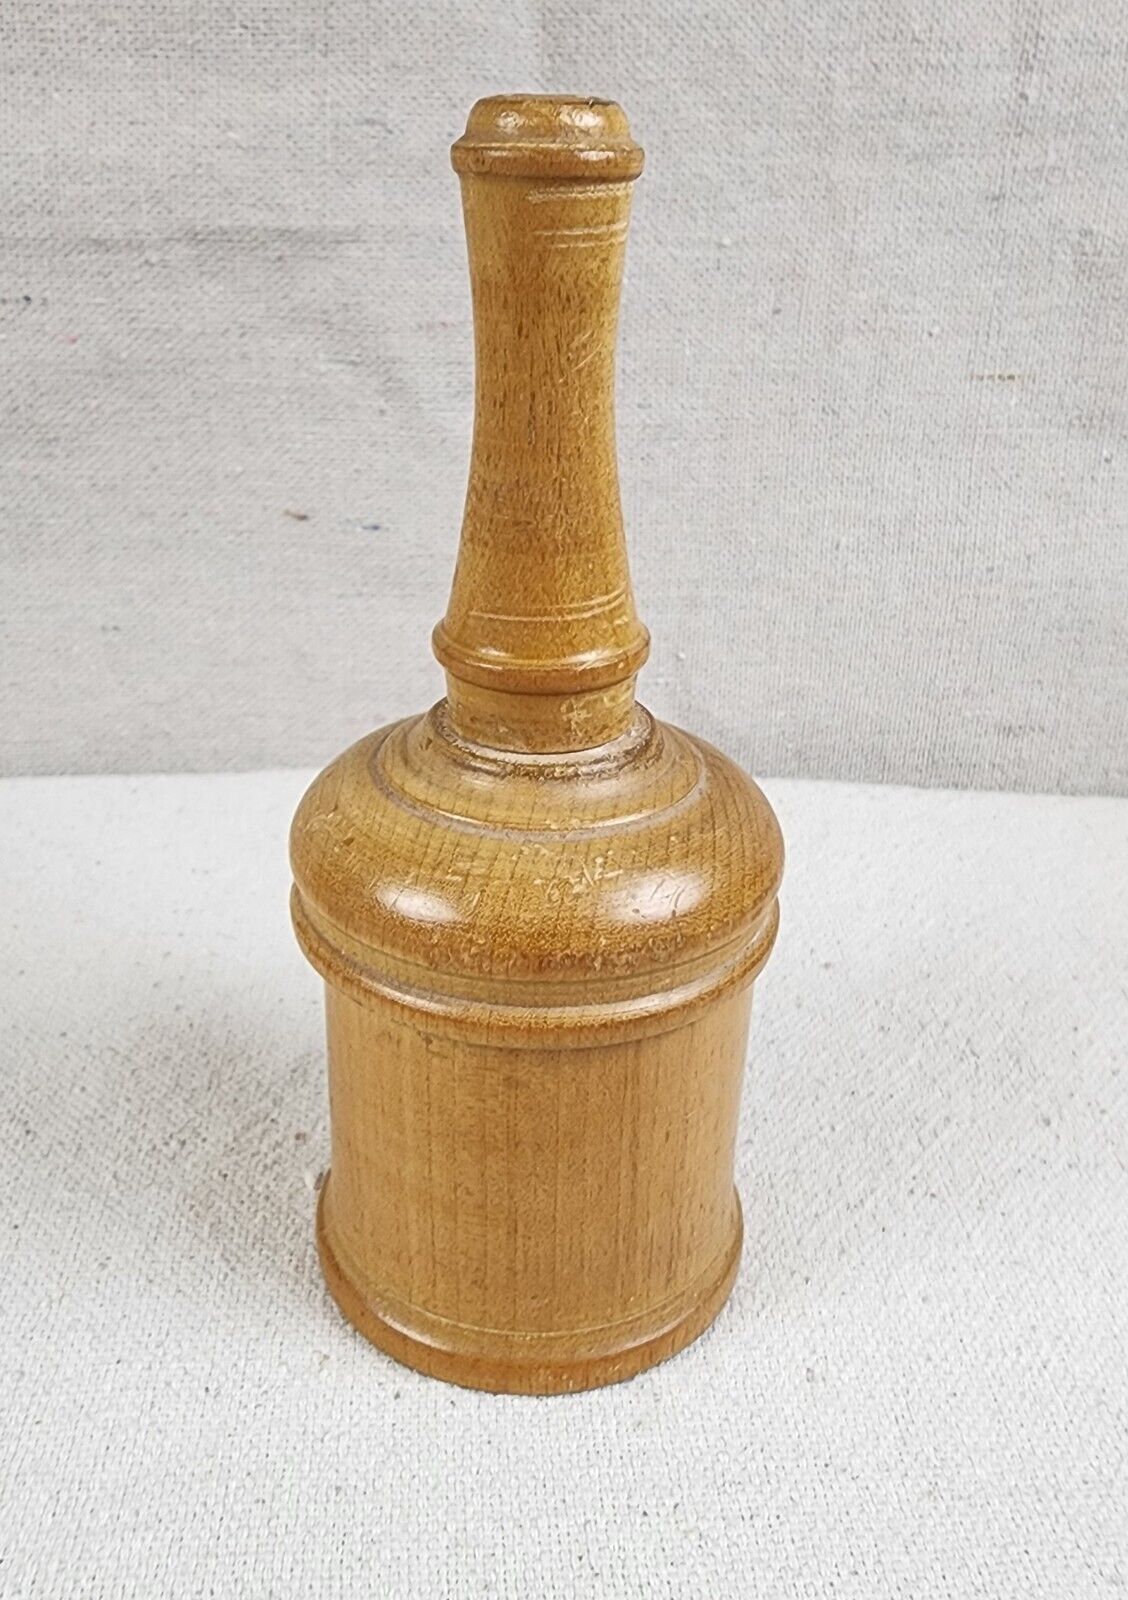 Treenware Antique Victorian Wood Glove Dusting Powder Shaker Dispenser Wig Engli